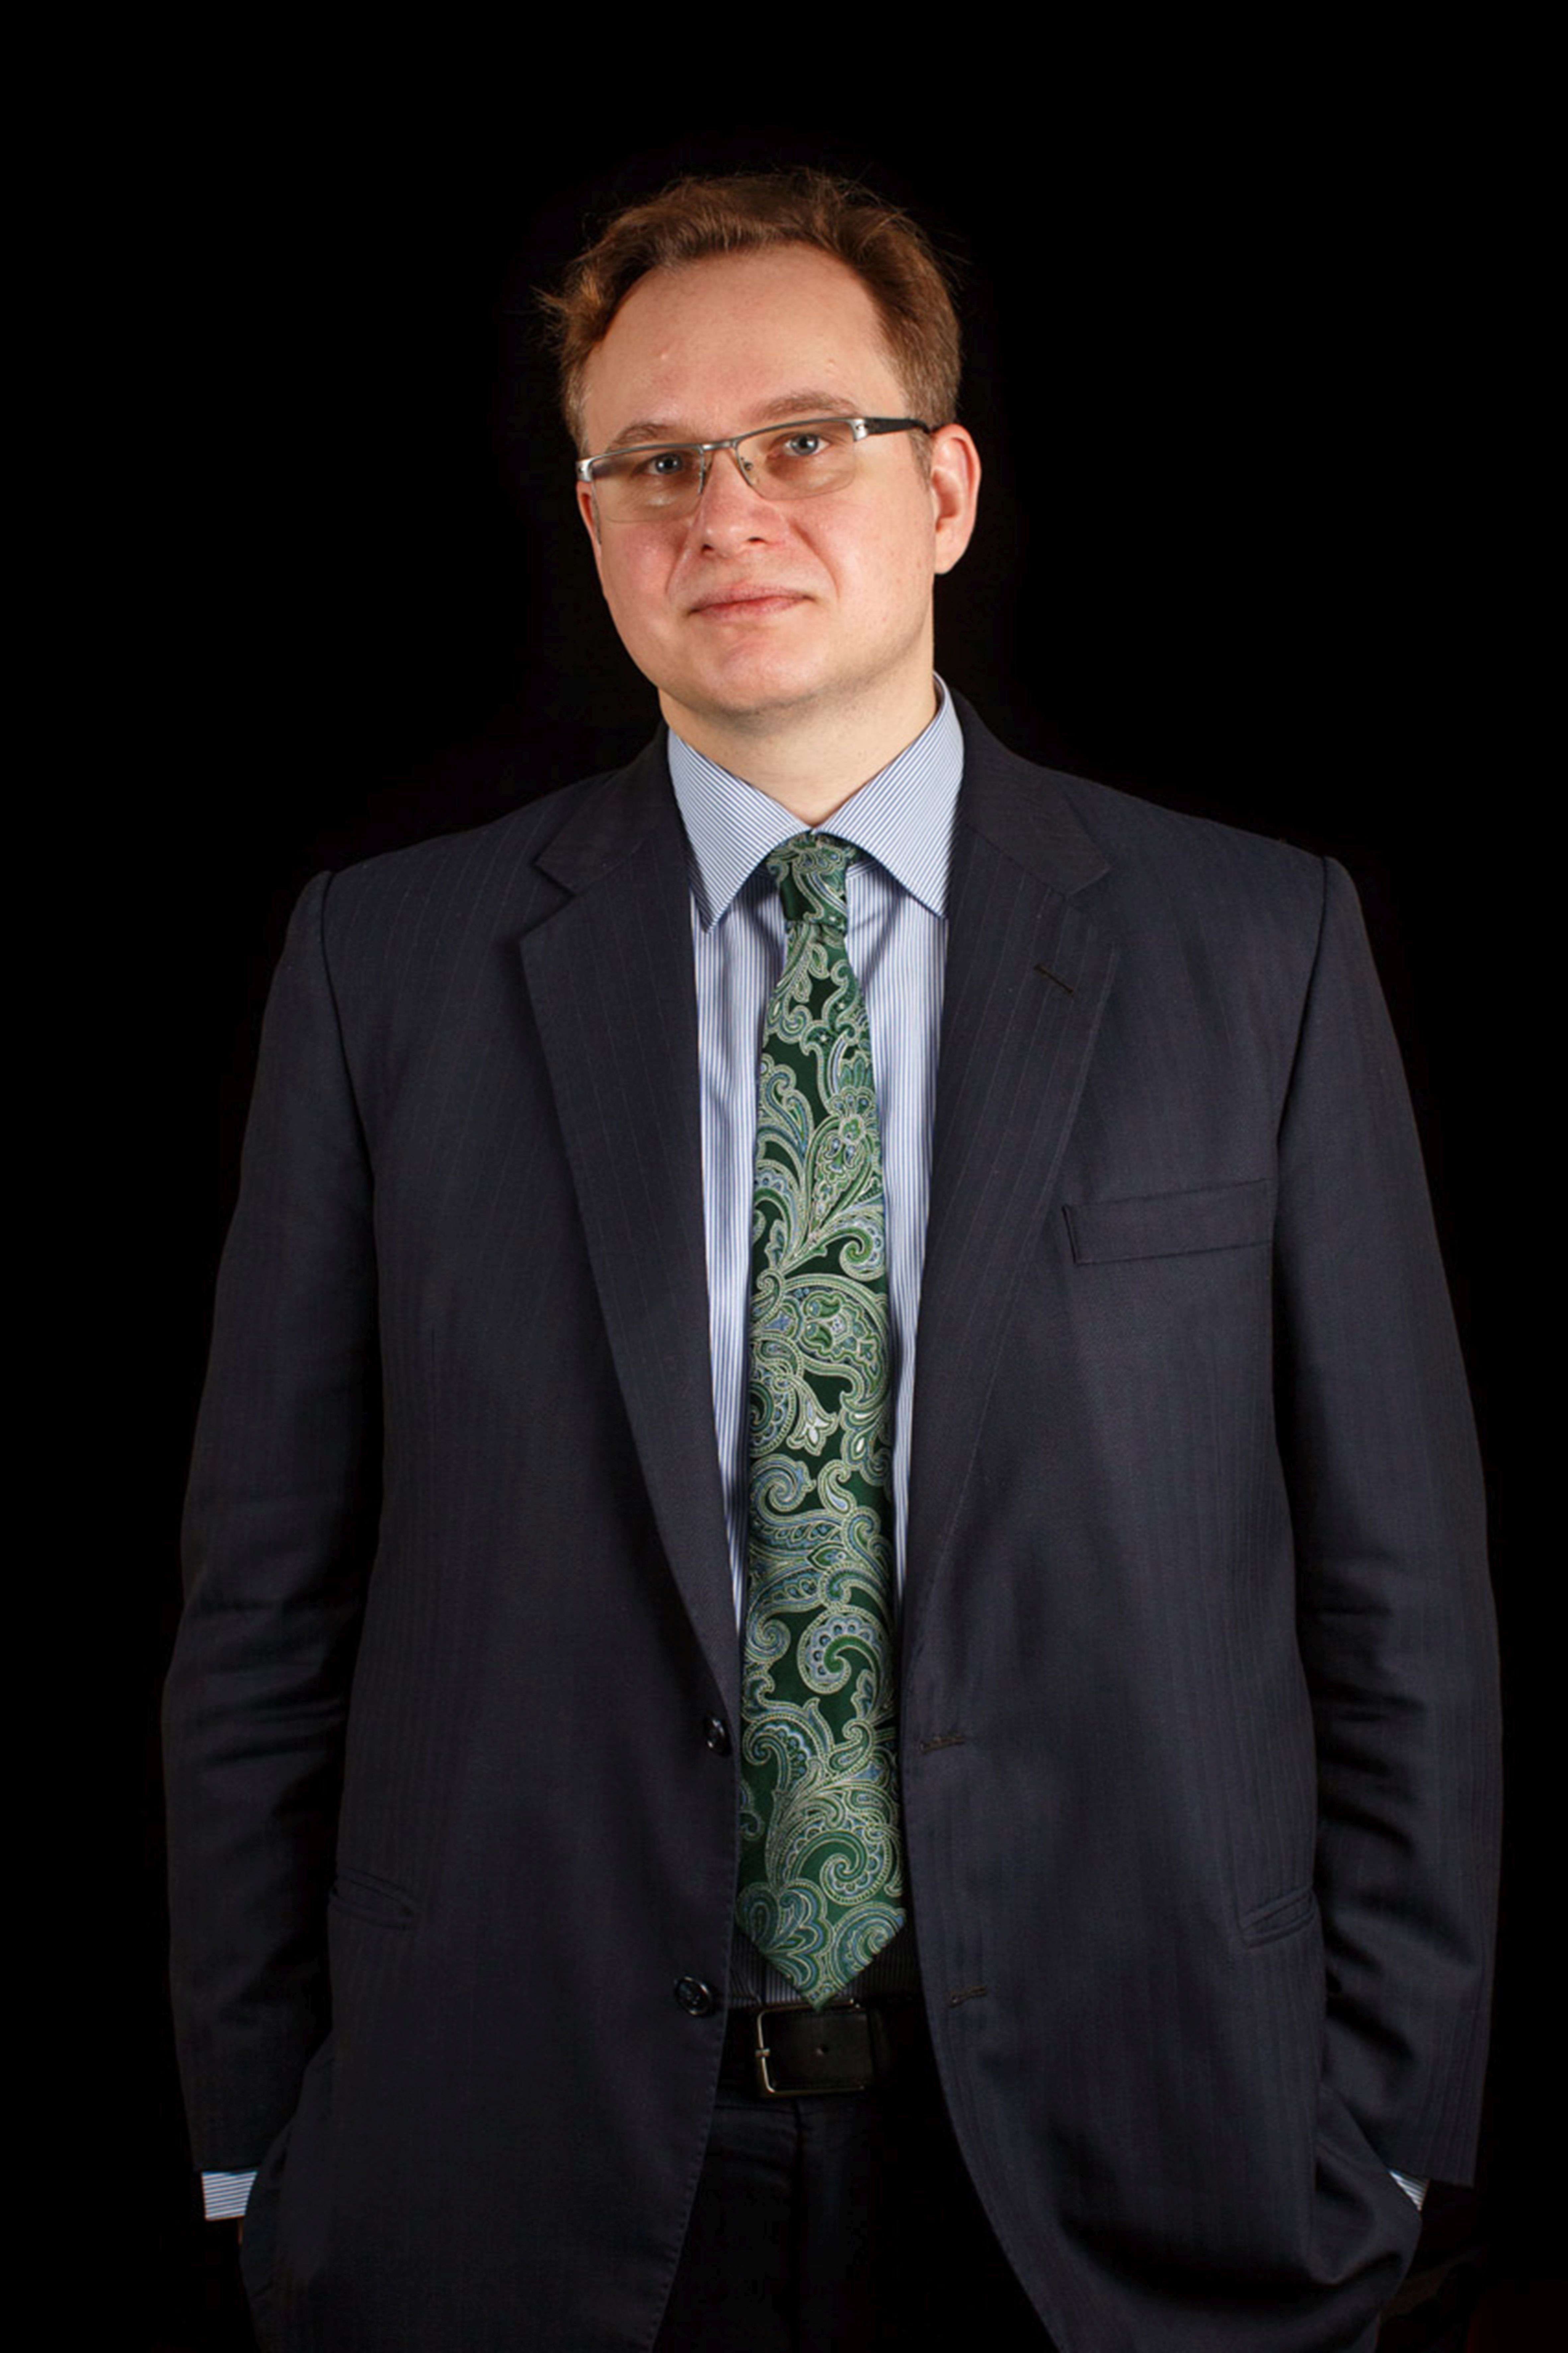 Professor Martin Meyer, school director and Professor of Business and Innovation